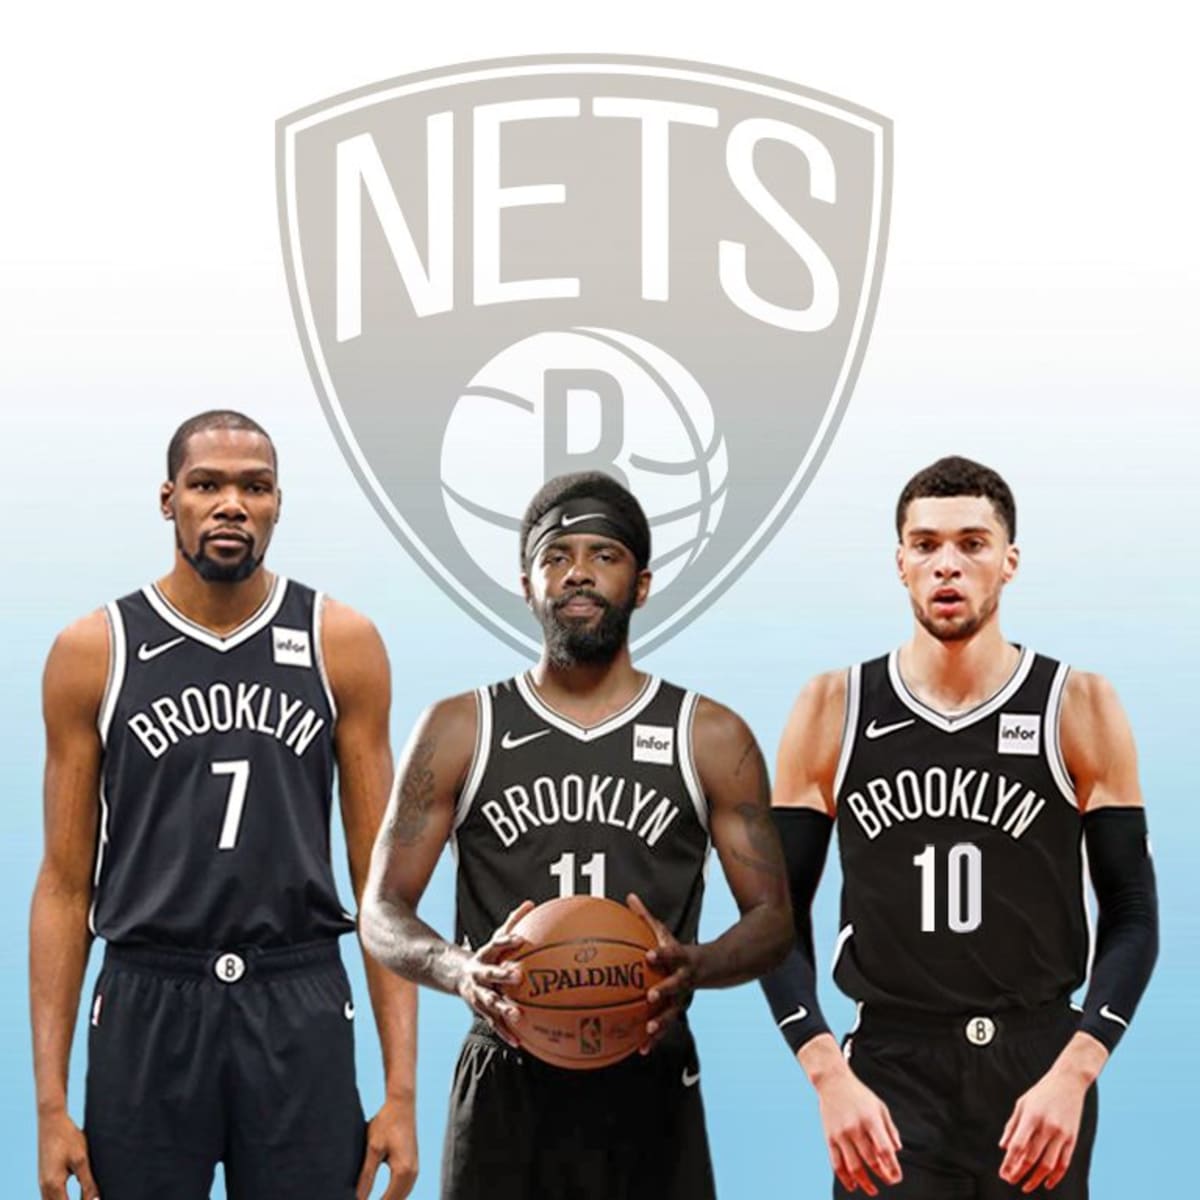 Sportsnet - First look at James Harden in a Brooklyn Nets jersey